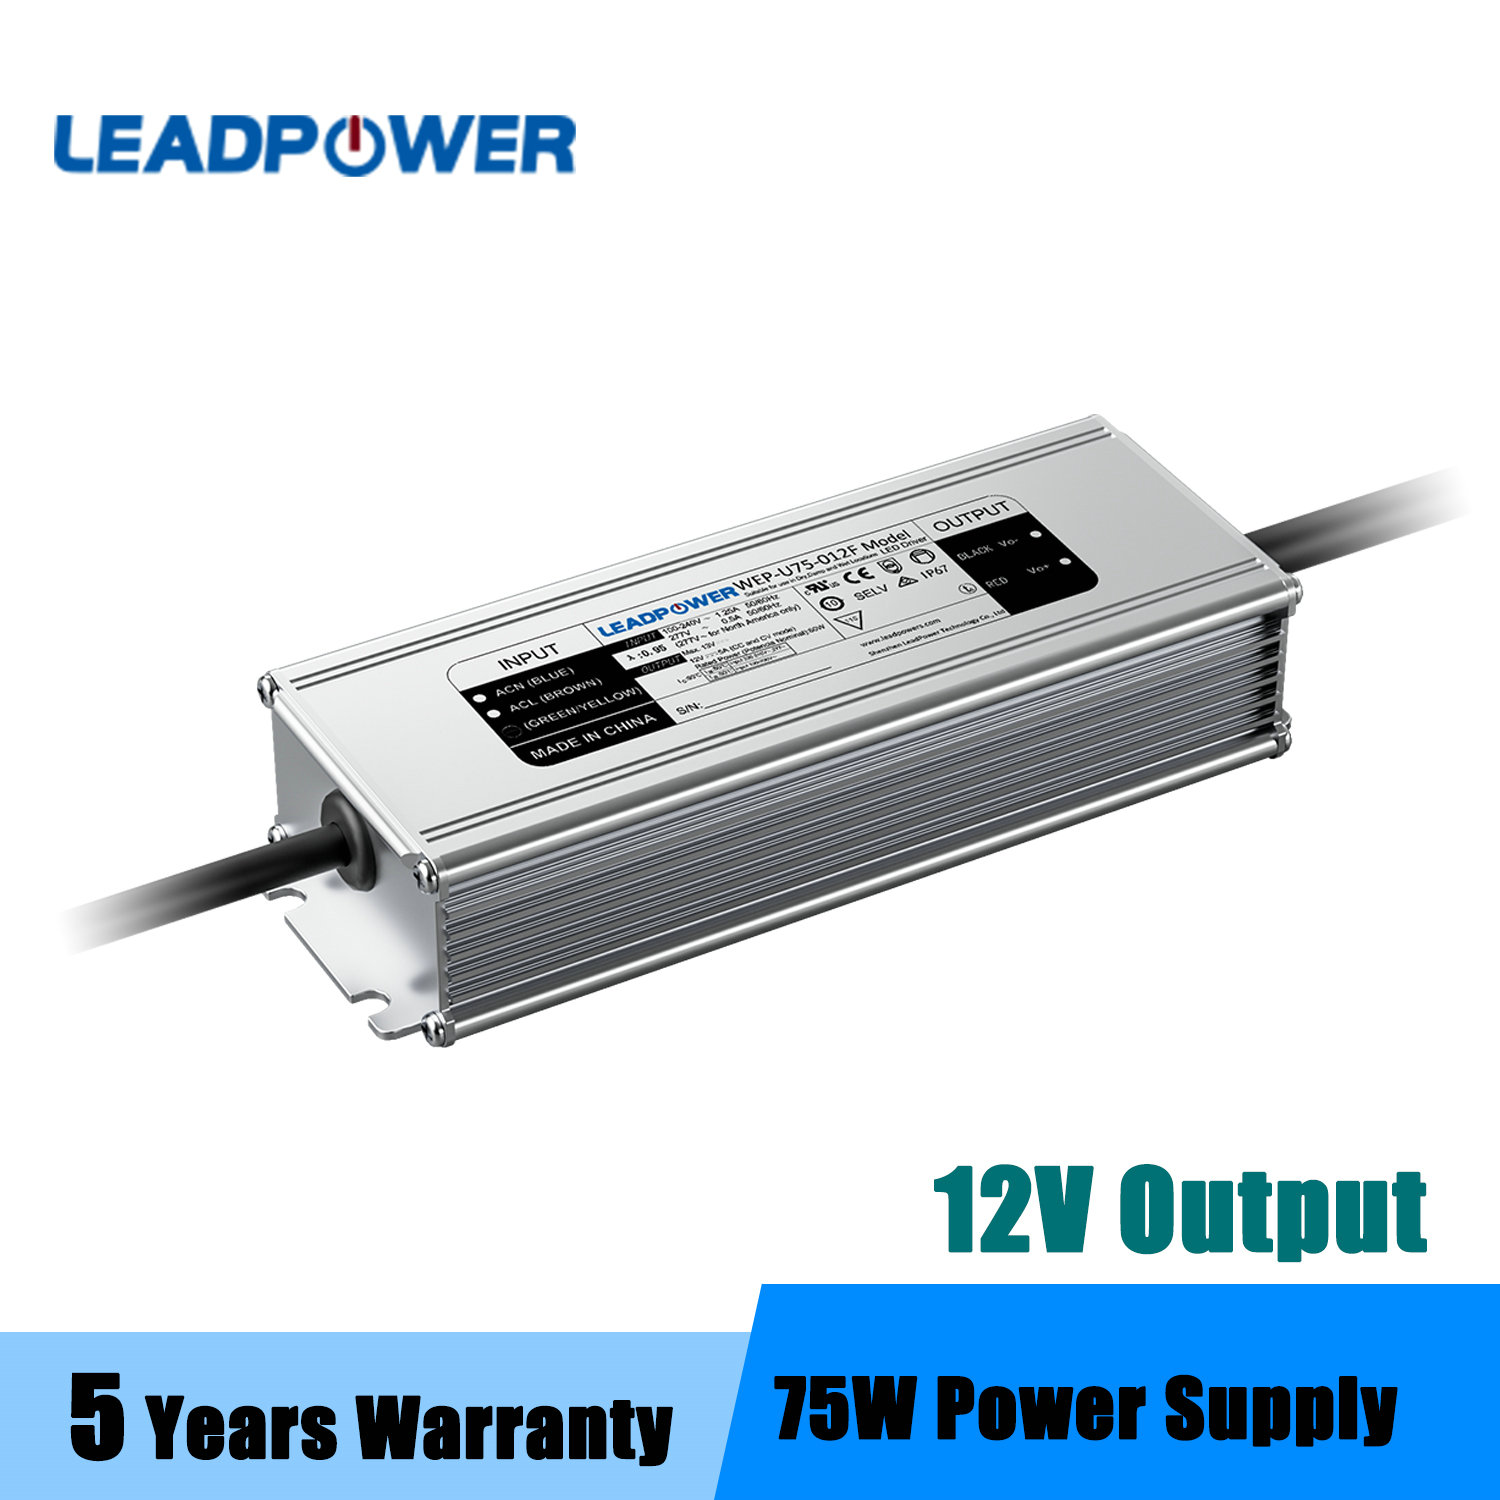 WEP-U75-012F Waterproof LED Power Supply